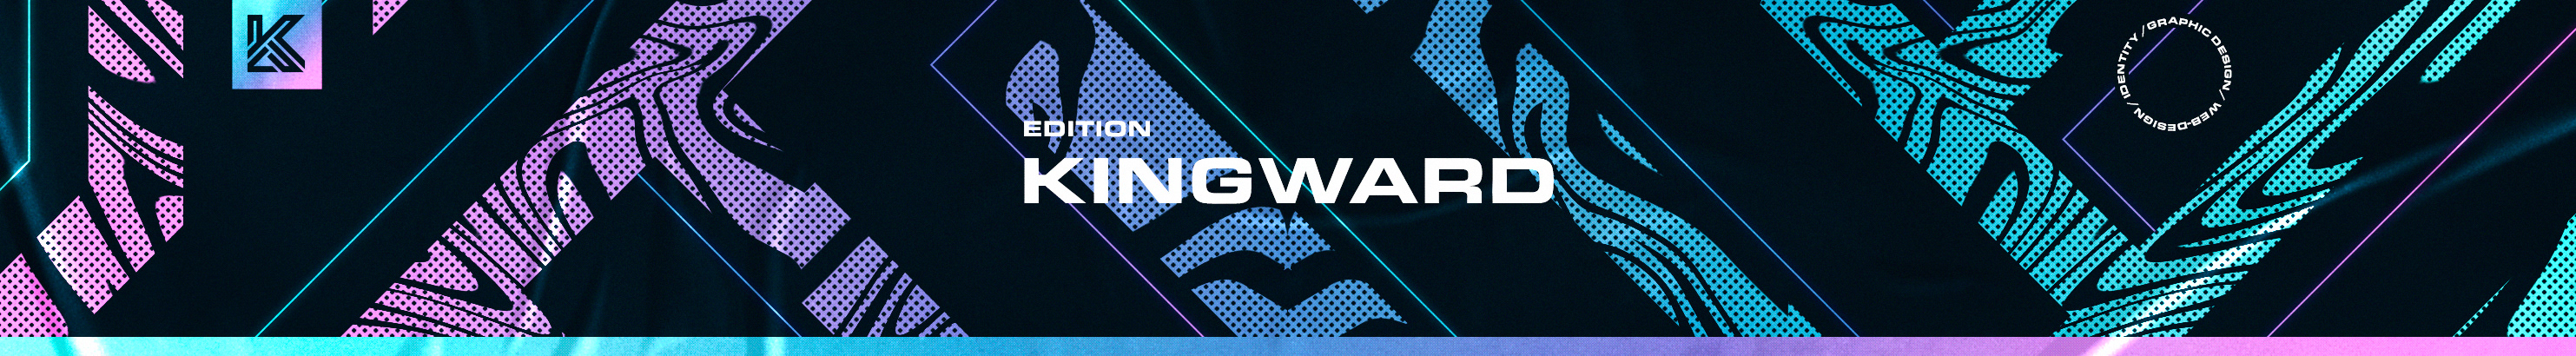 Kingward Edition's profile banner